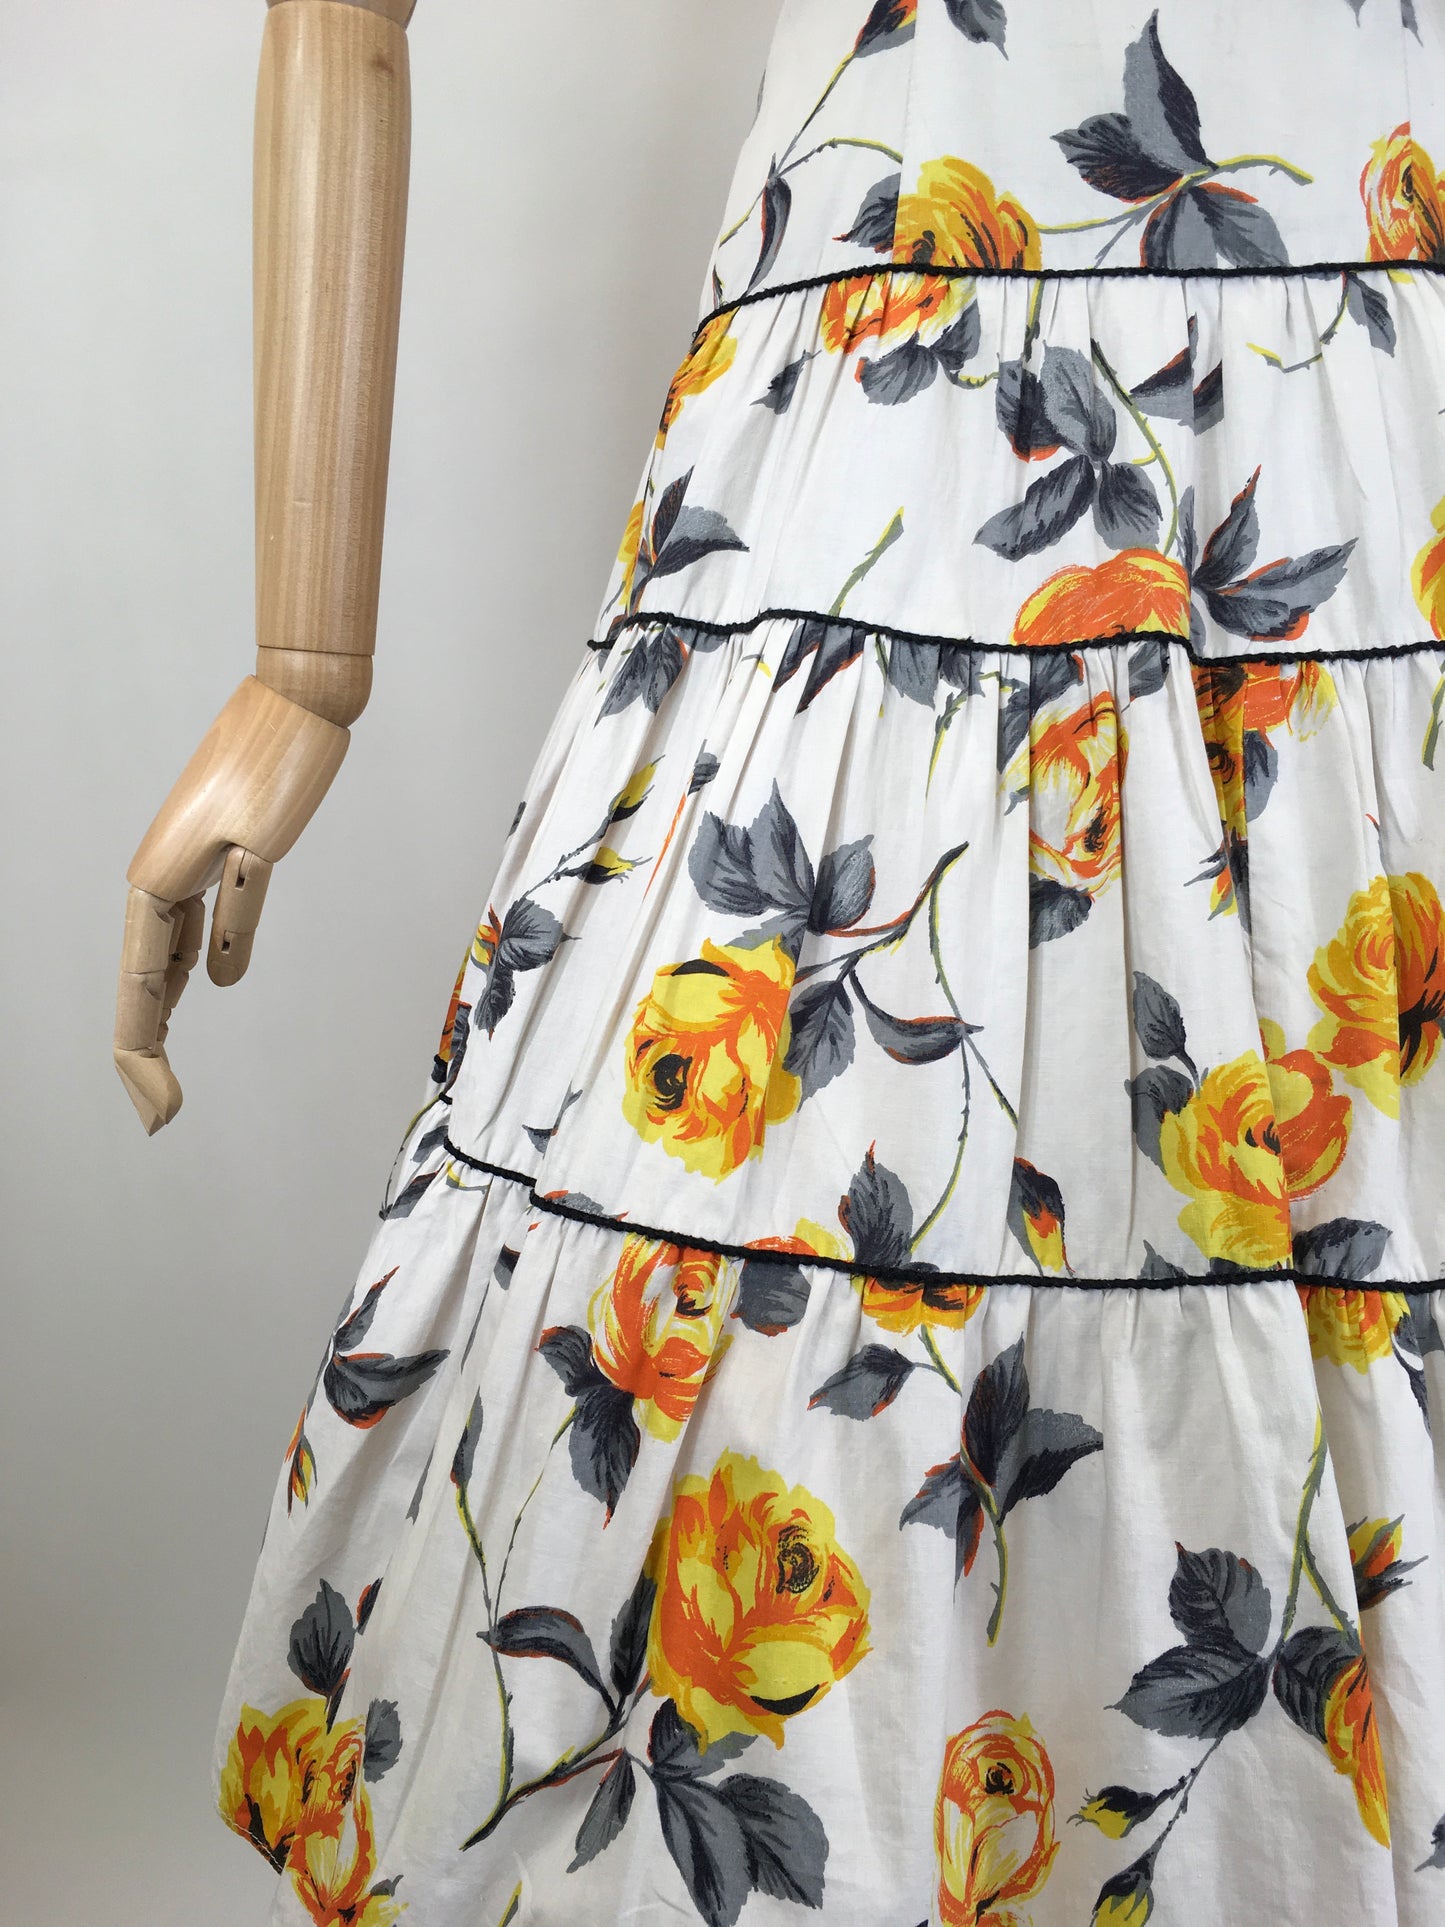 Original 1950's Darling Cotton Day Dress - In A Sunshine Yellow, Orange, Black and White